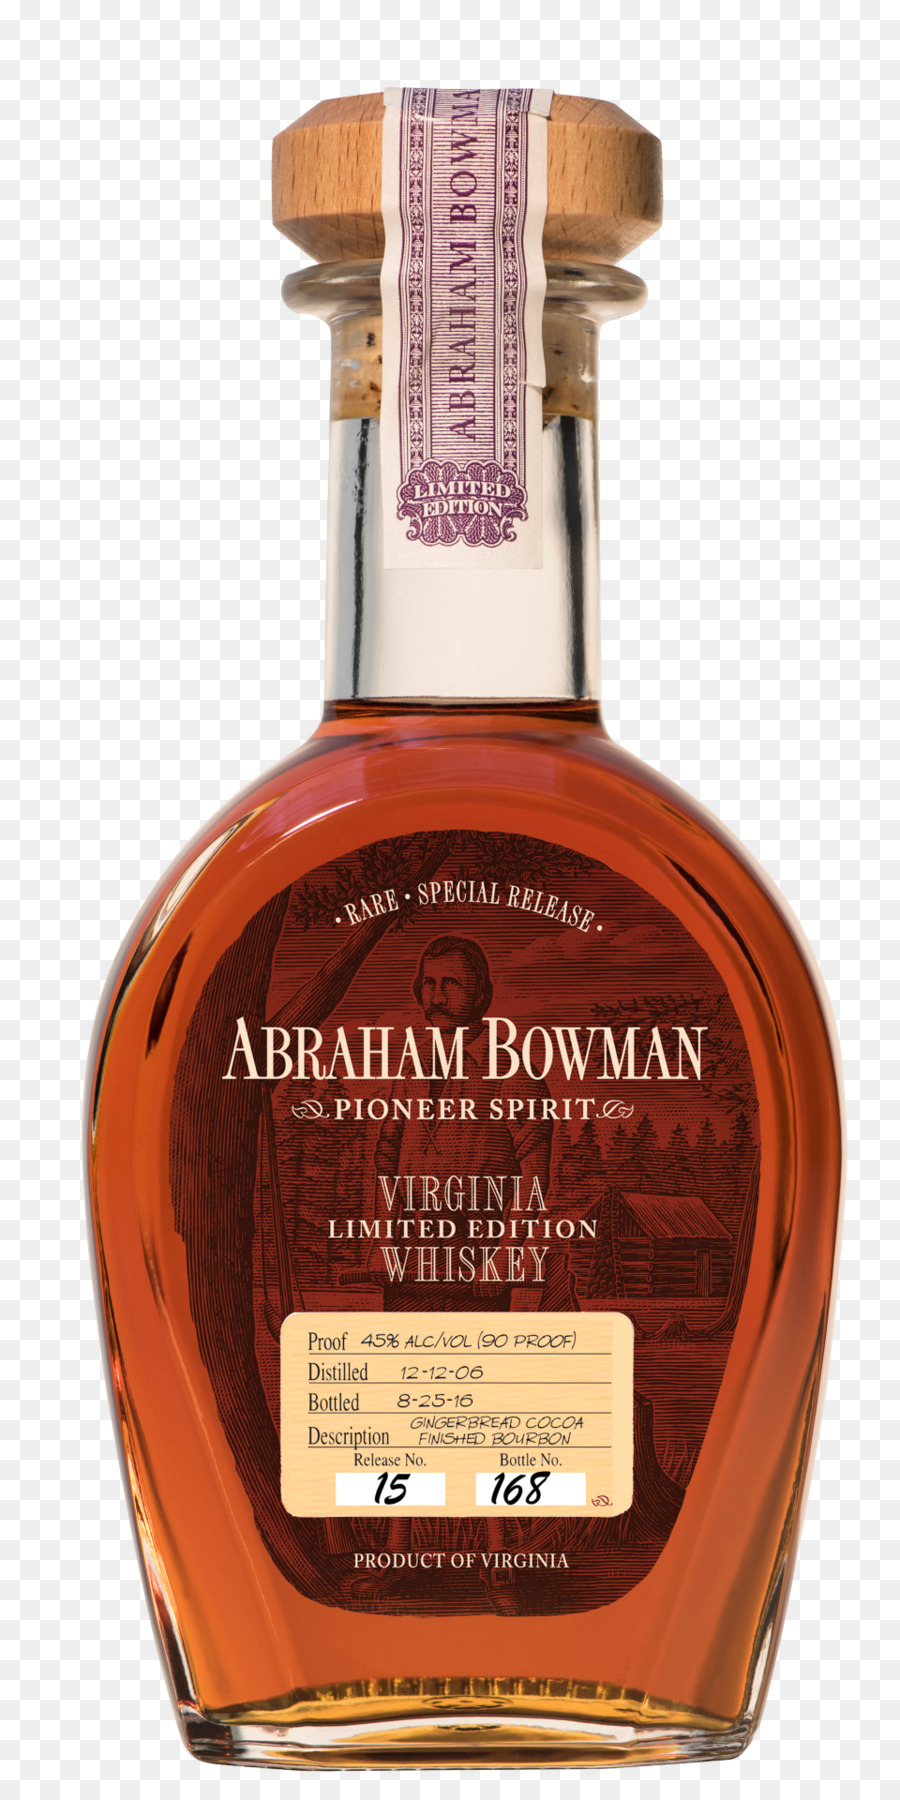 Tennessee whiskey A. Smith Bowman Rượu Bourbon rượu whisky Lúa mạch đen whiskey Sazerac - cocktail